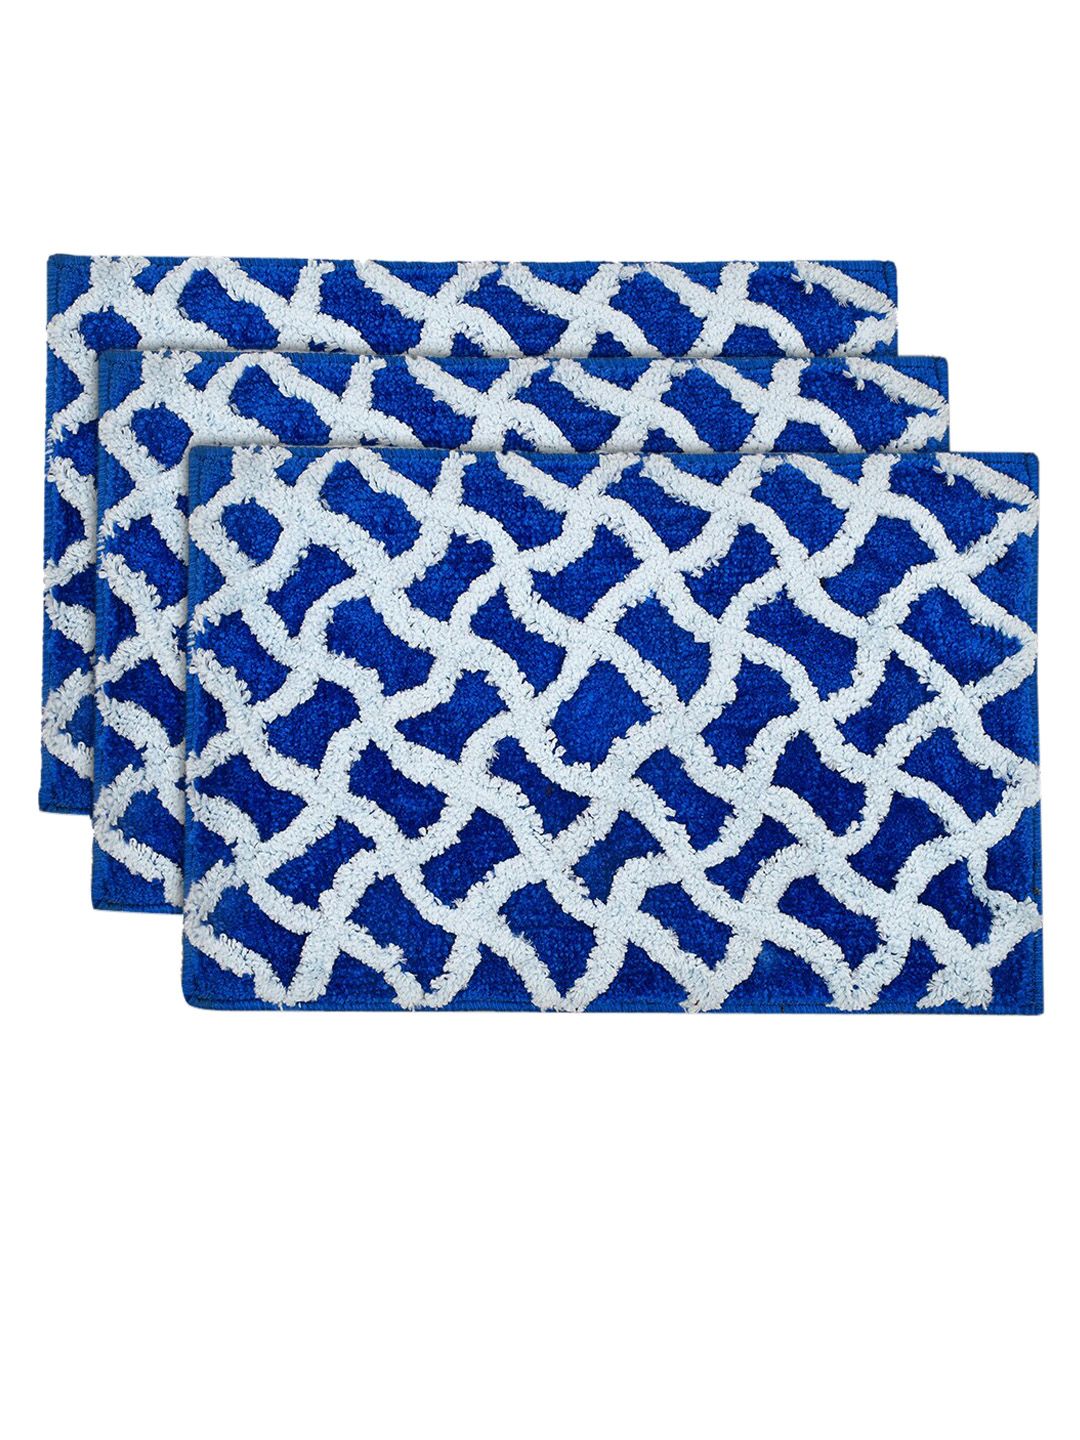 Kuber Industries Set Of 3 Blue Patterned Anti-Skid Doormats Price in India